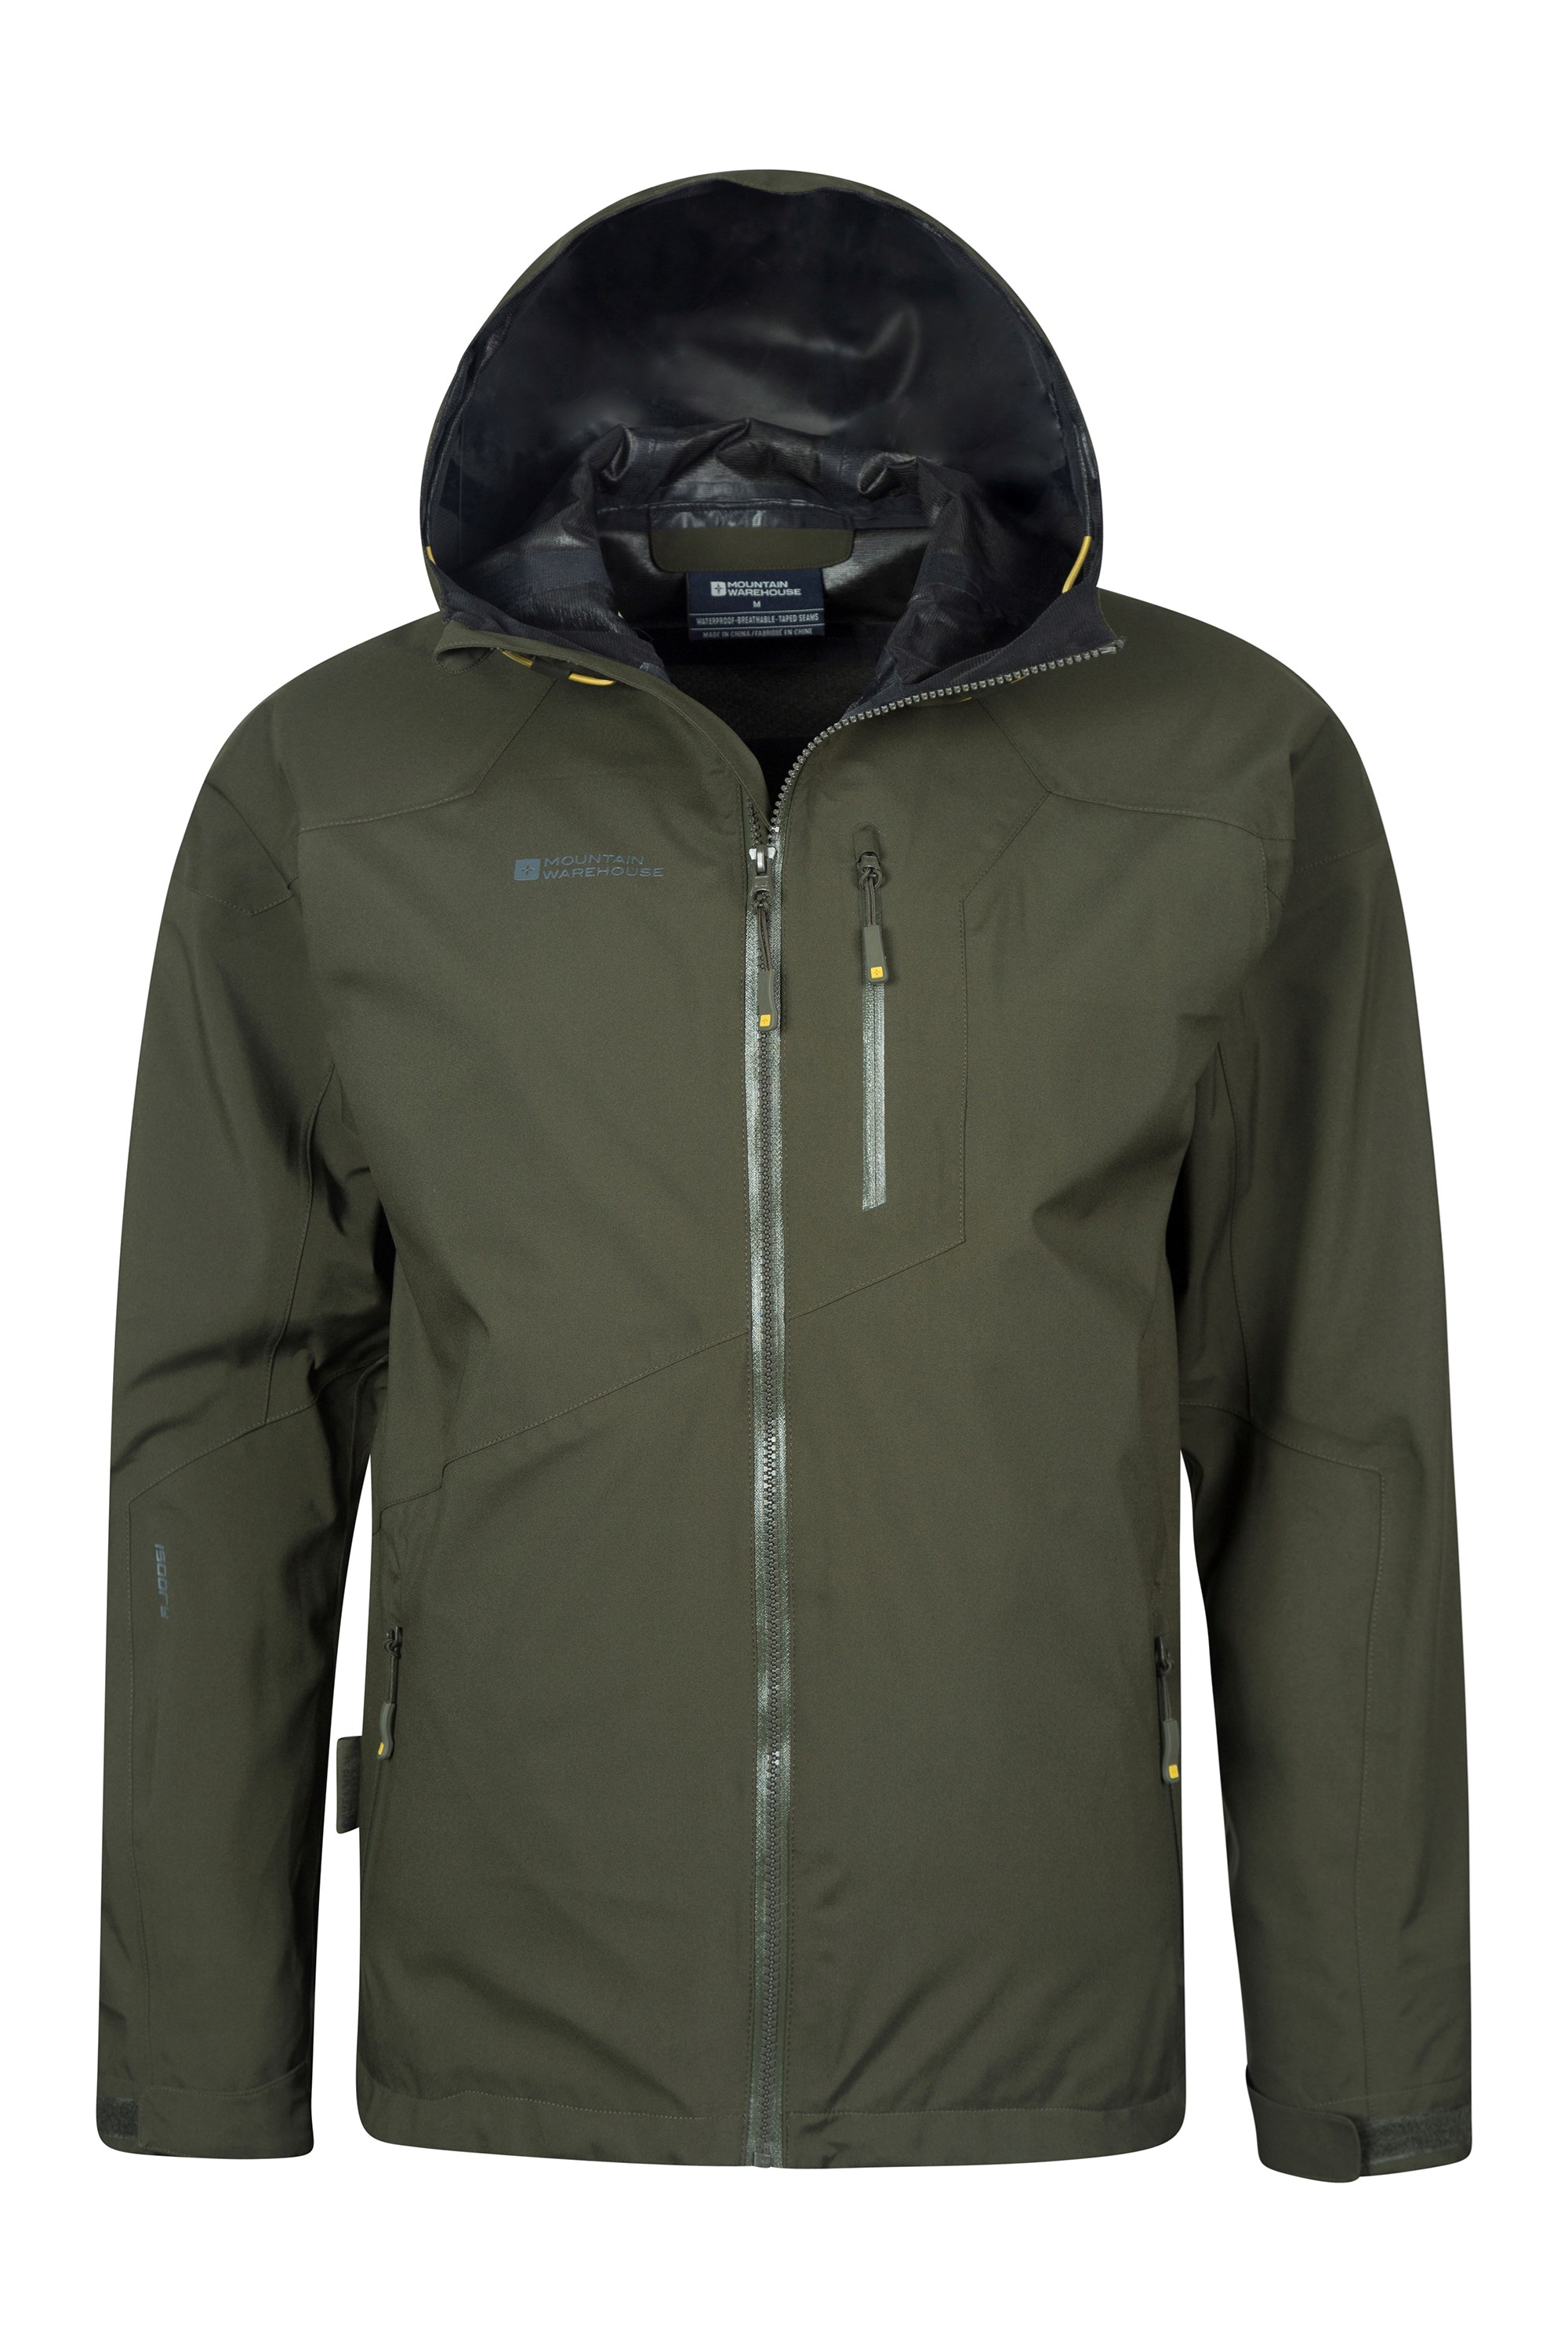 Travelling Security Pockets for Adjustable Hood & Hem Raincoat Mountain Warehouse Bachill Mens Waterproof Jacket Full Zip Casual Jacket Breathable Coat 